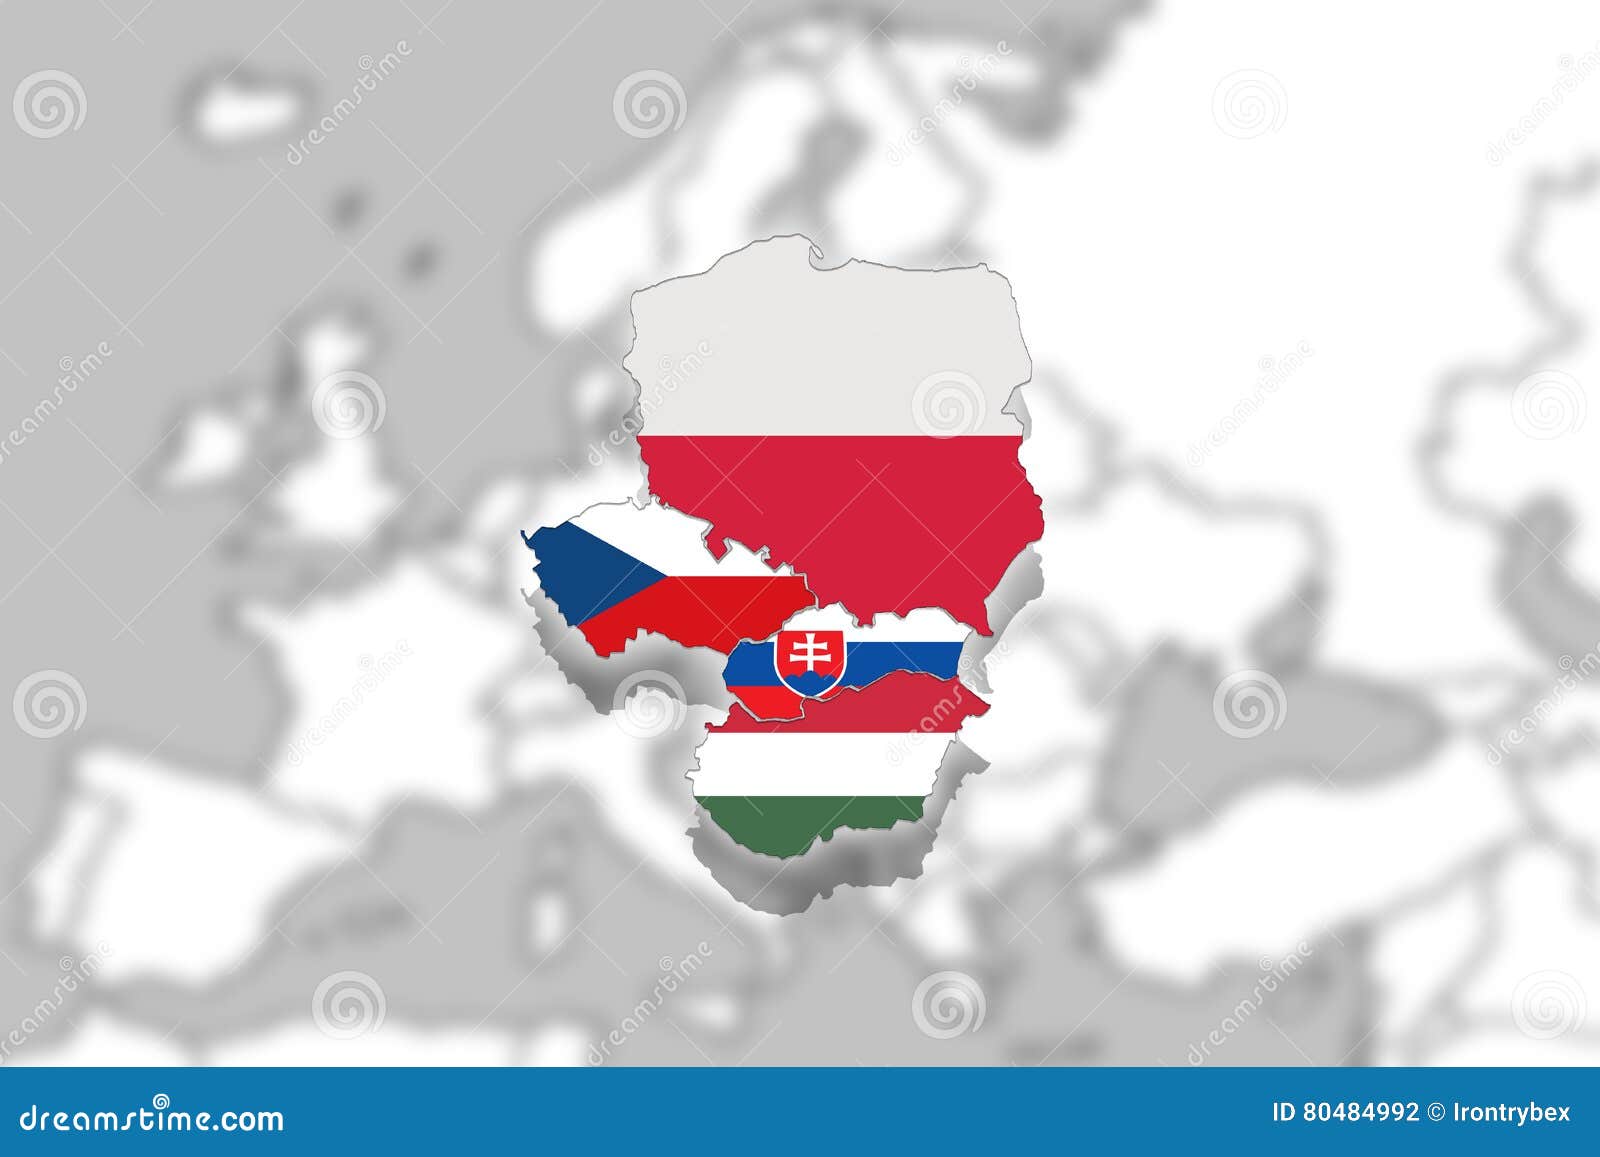 grupo-de-v-visegrado-en-el-fondo-blured-de-europa-polonia-rep%C3%BAblica-checa-eslovaquia-hungr%C3%ADa-80484992.jpg